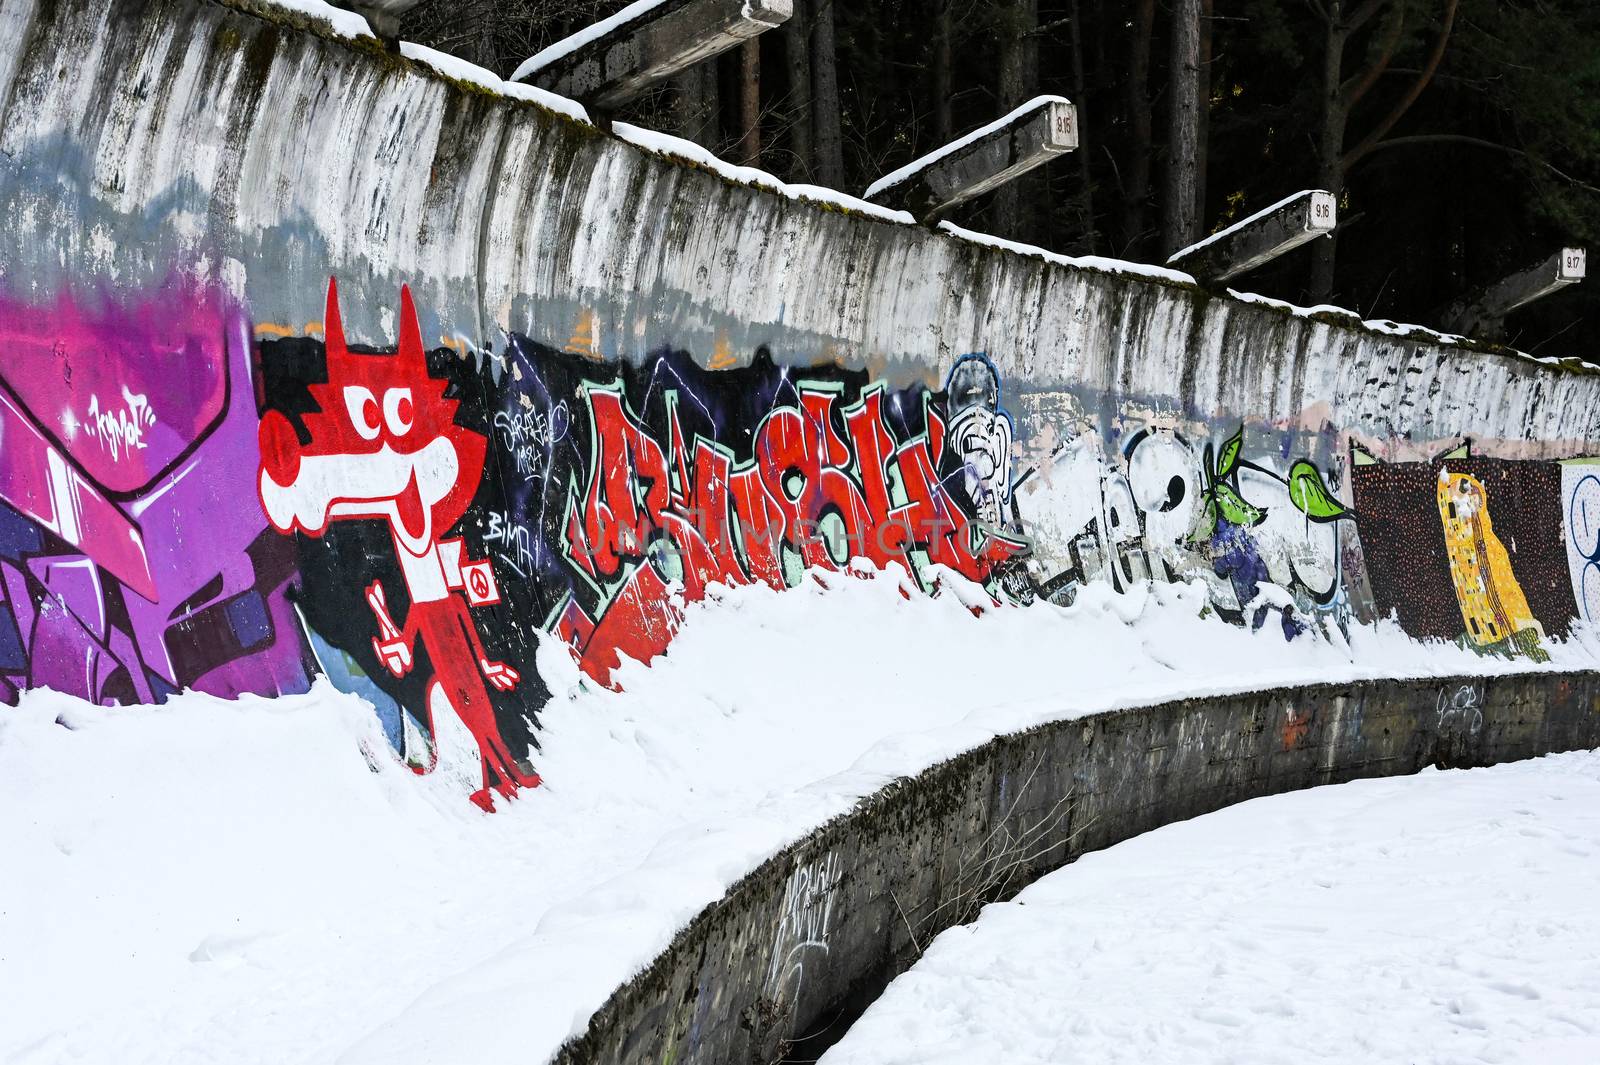 Abandoned bob trail on Trebevic Mountain near Sarajevo, decorated with graffiti